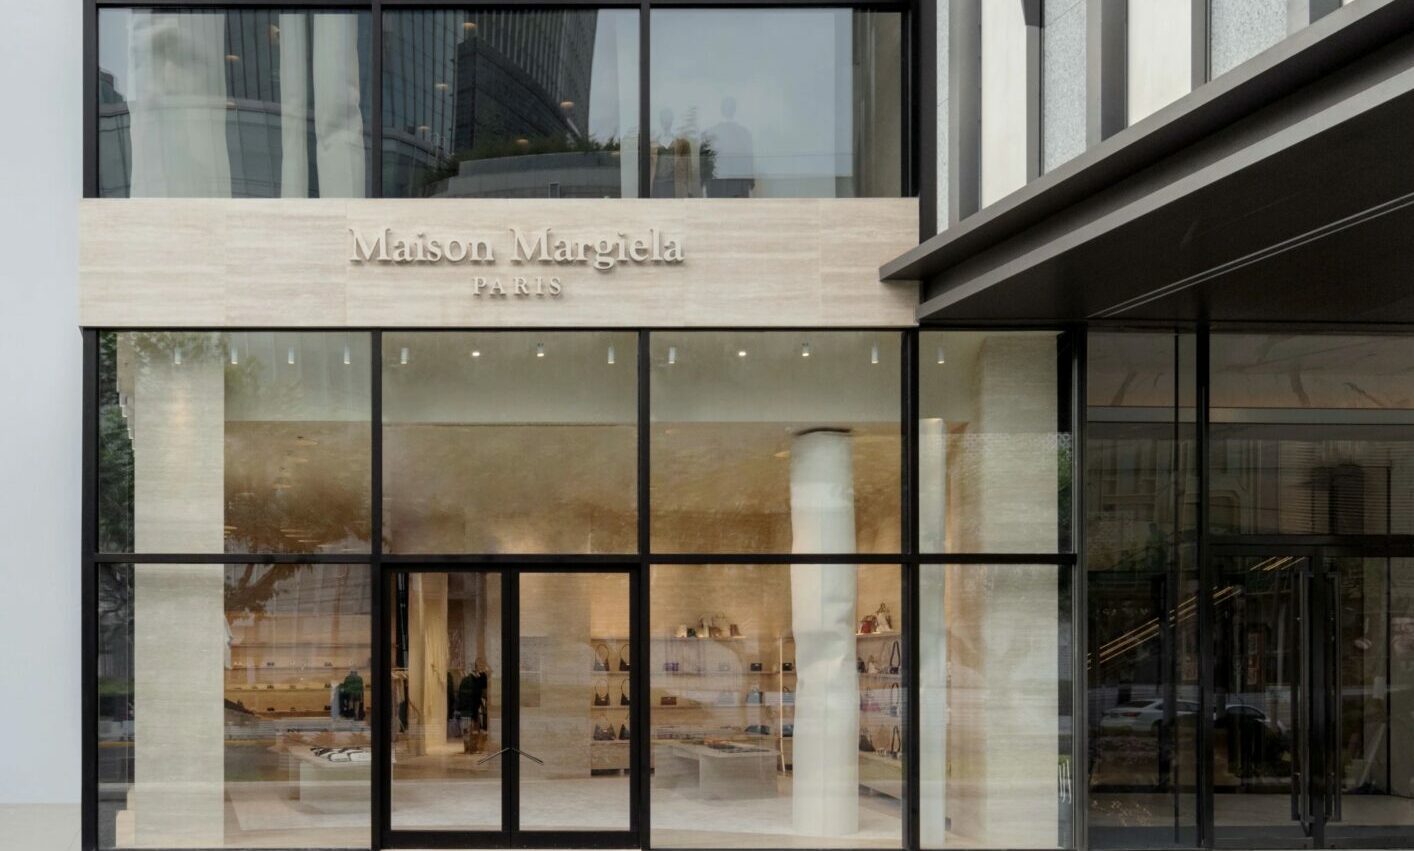 Maison Margiela 全球最大旗舰店于上海开业